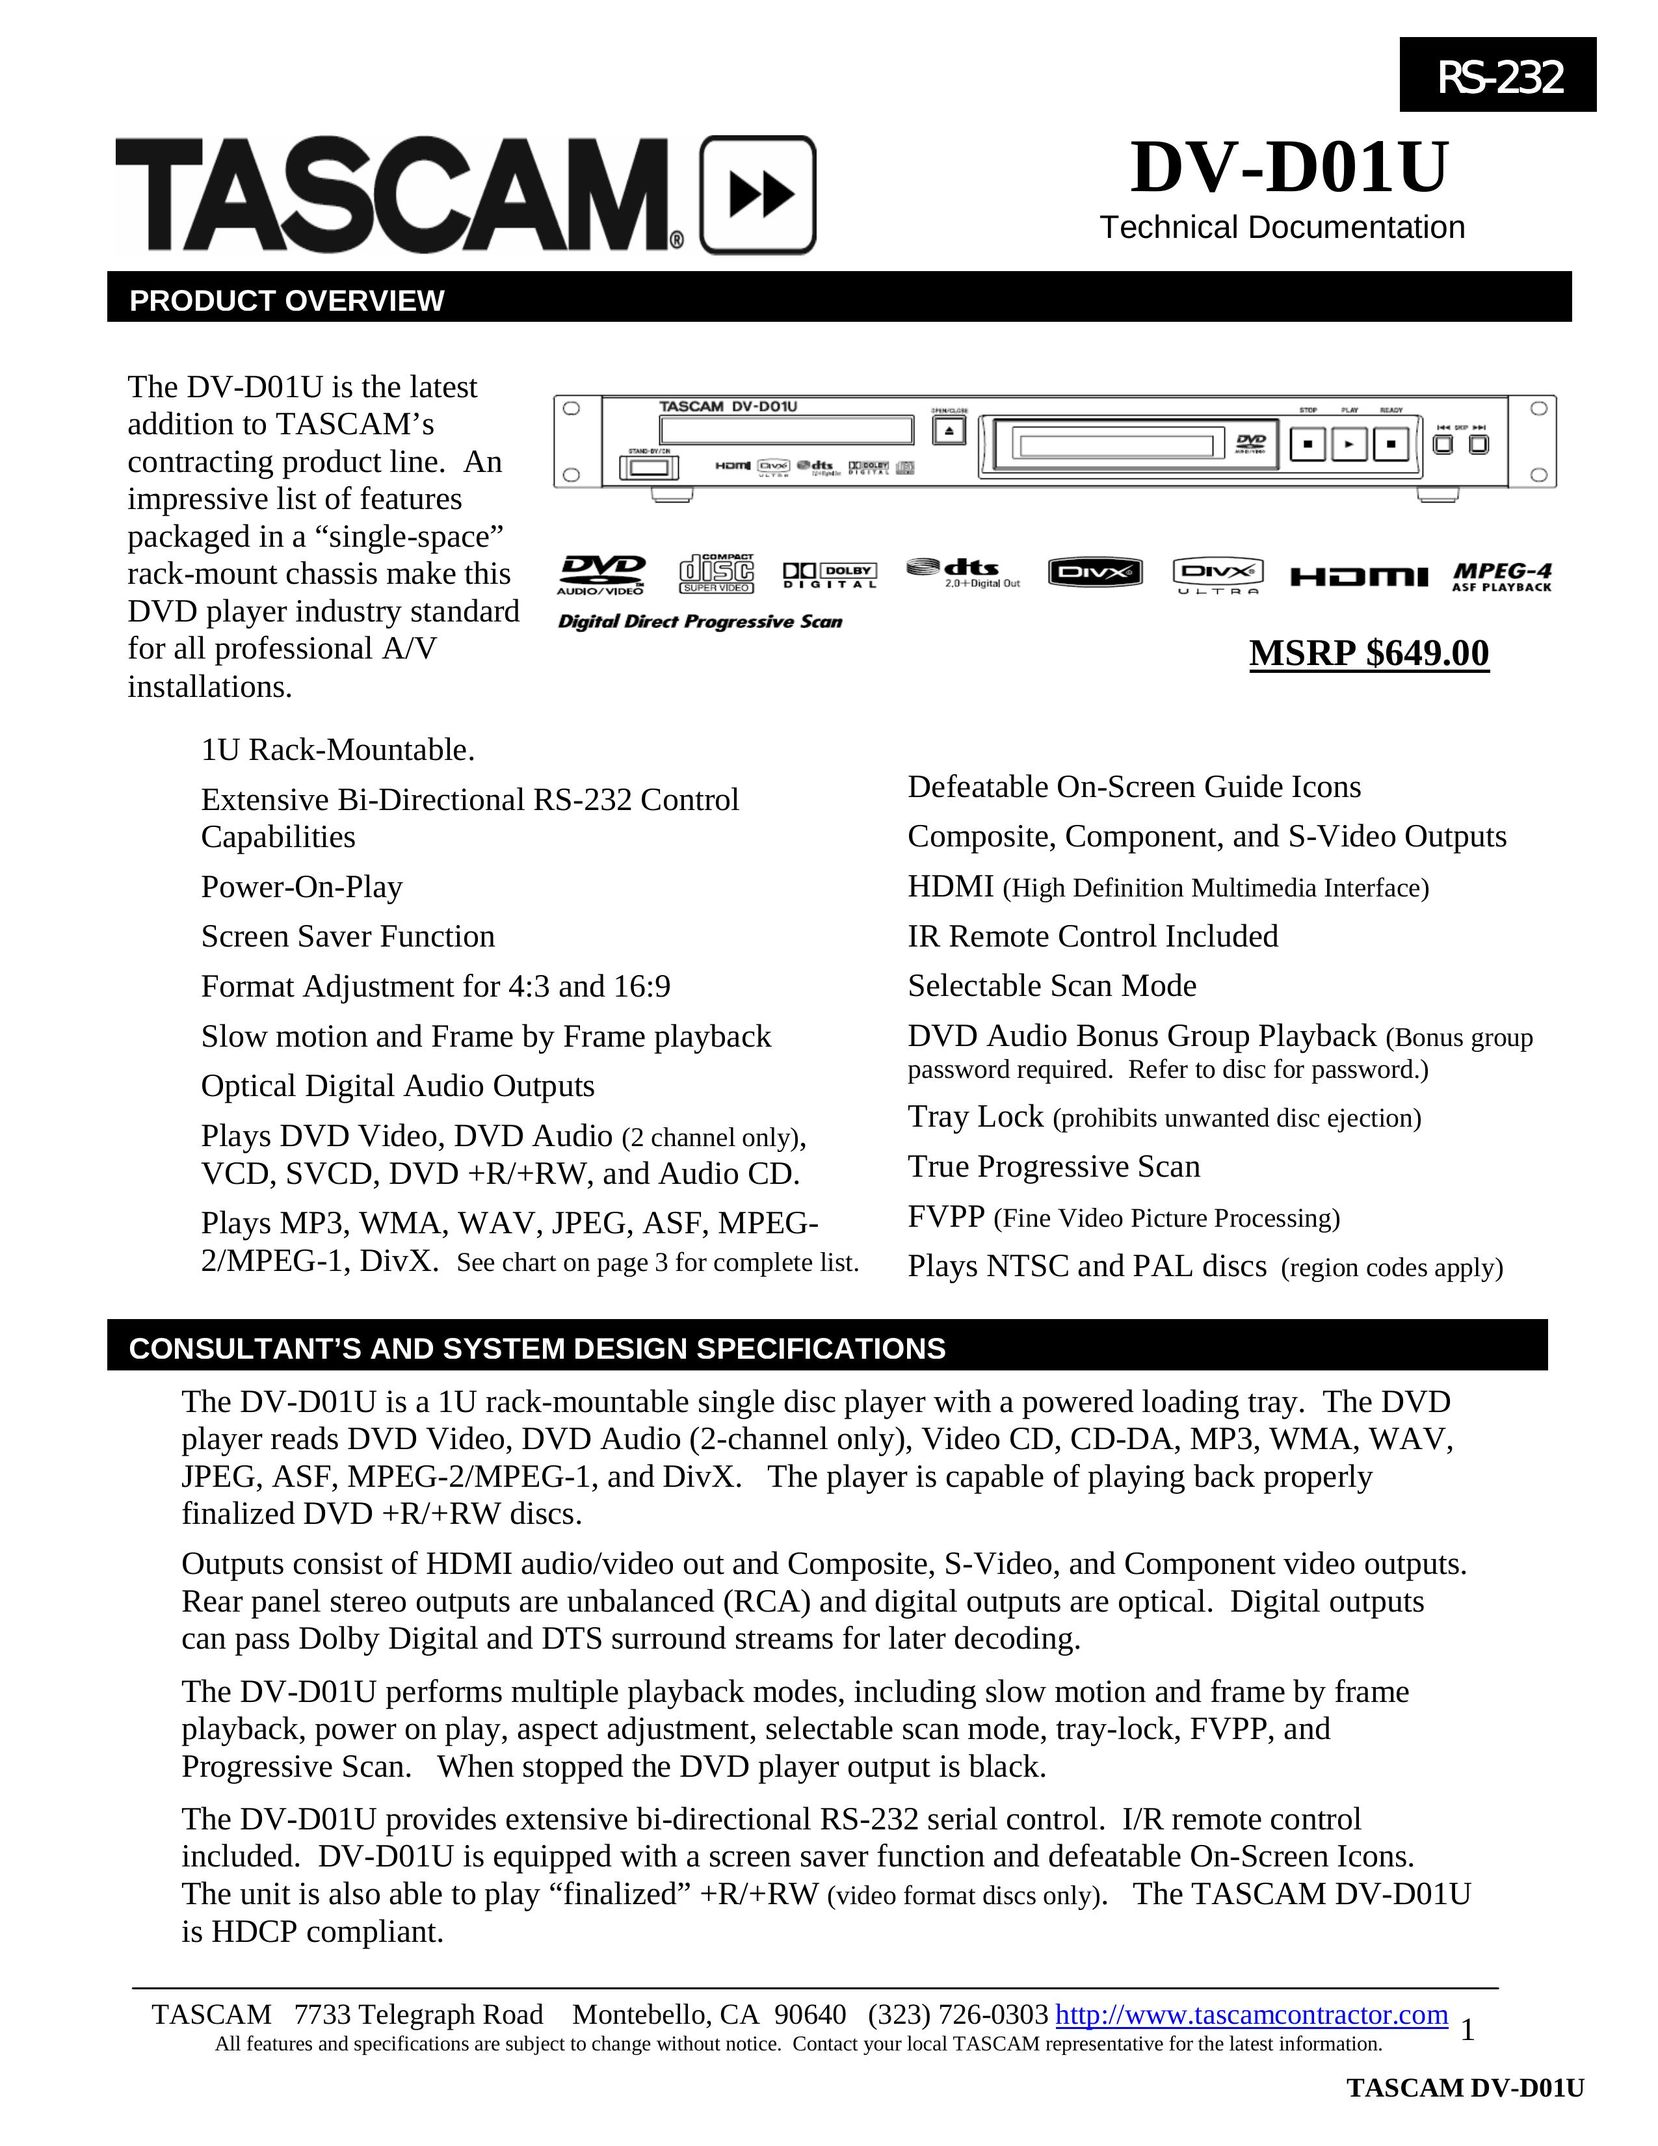 Tascam DV-D01U DVD Player User Manual